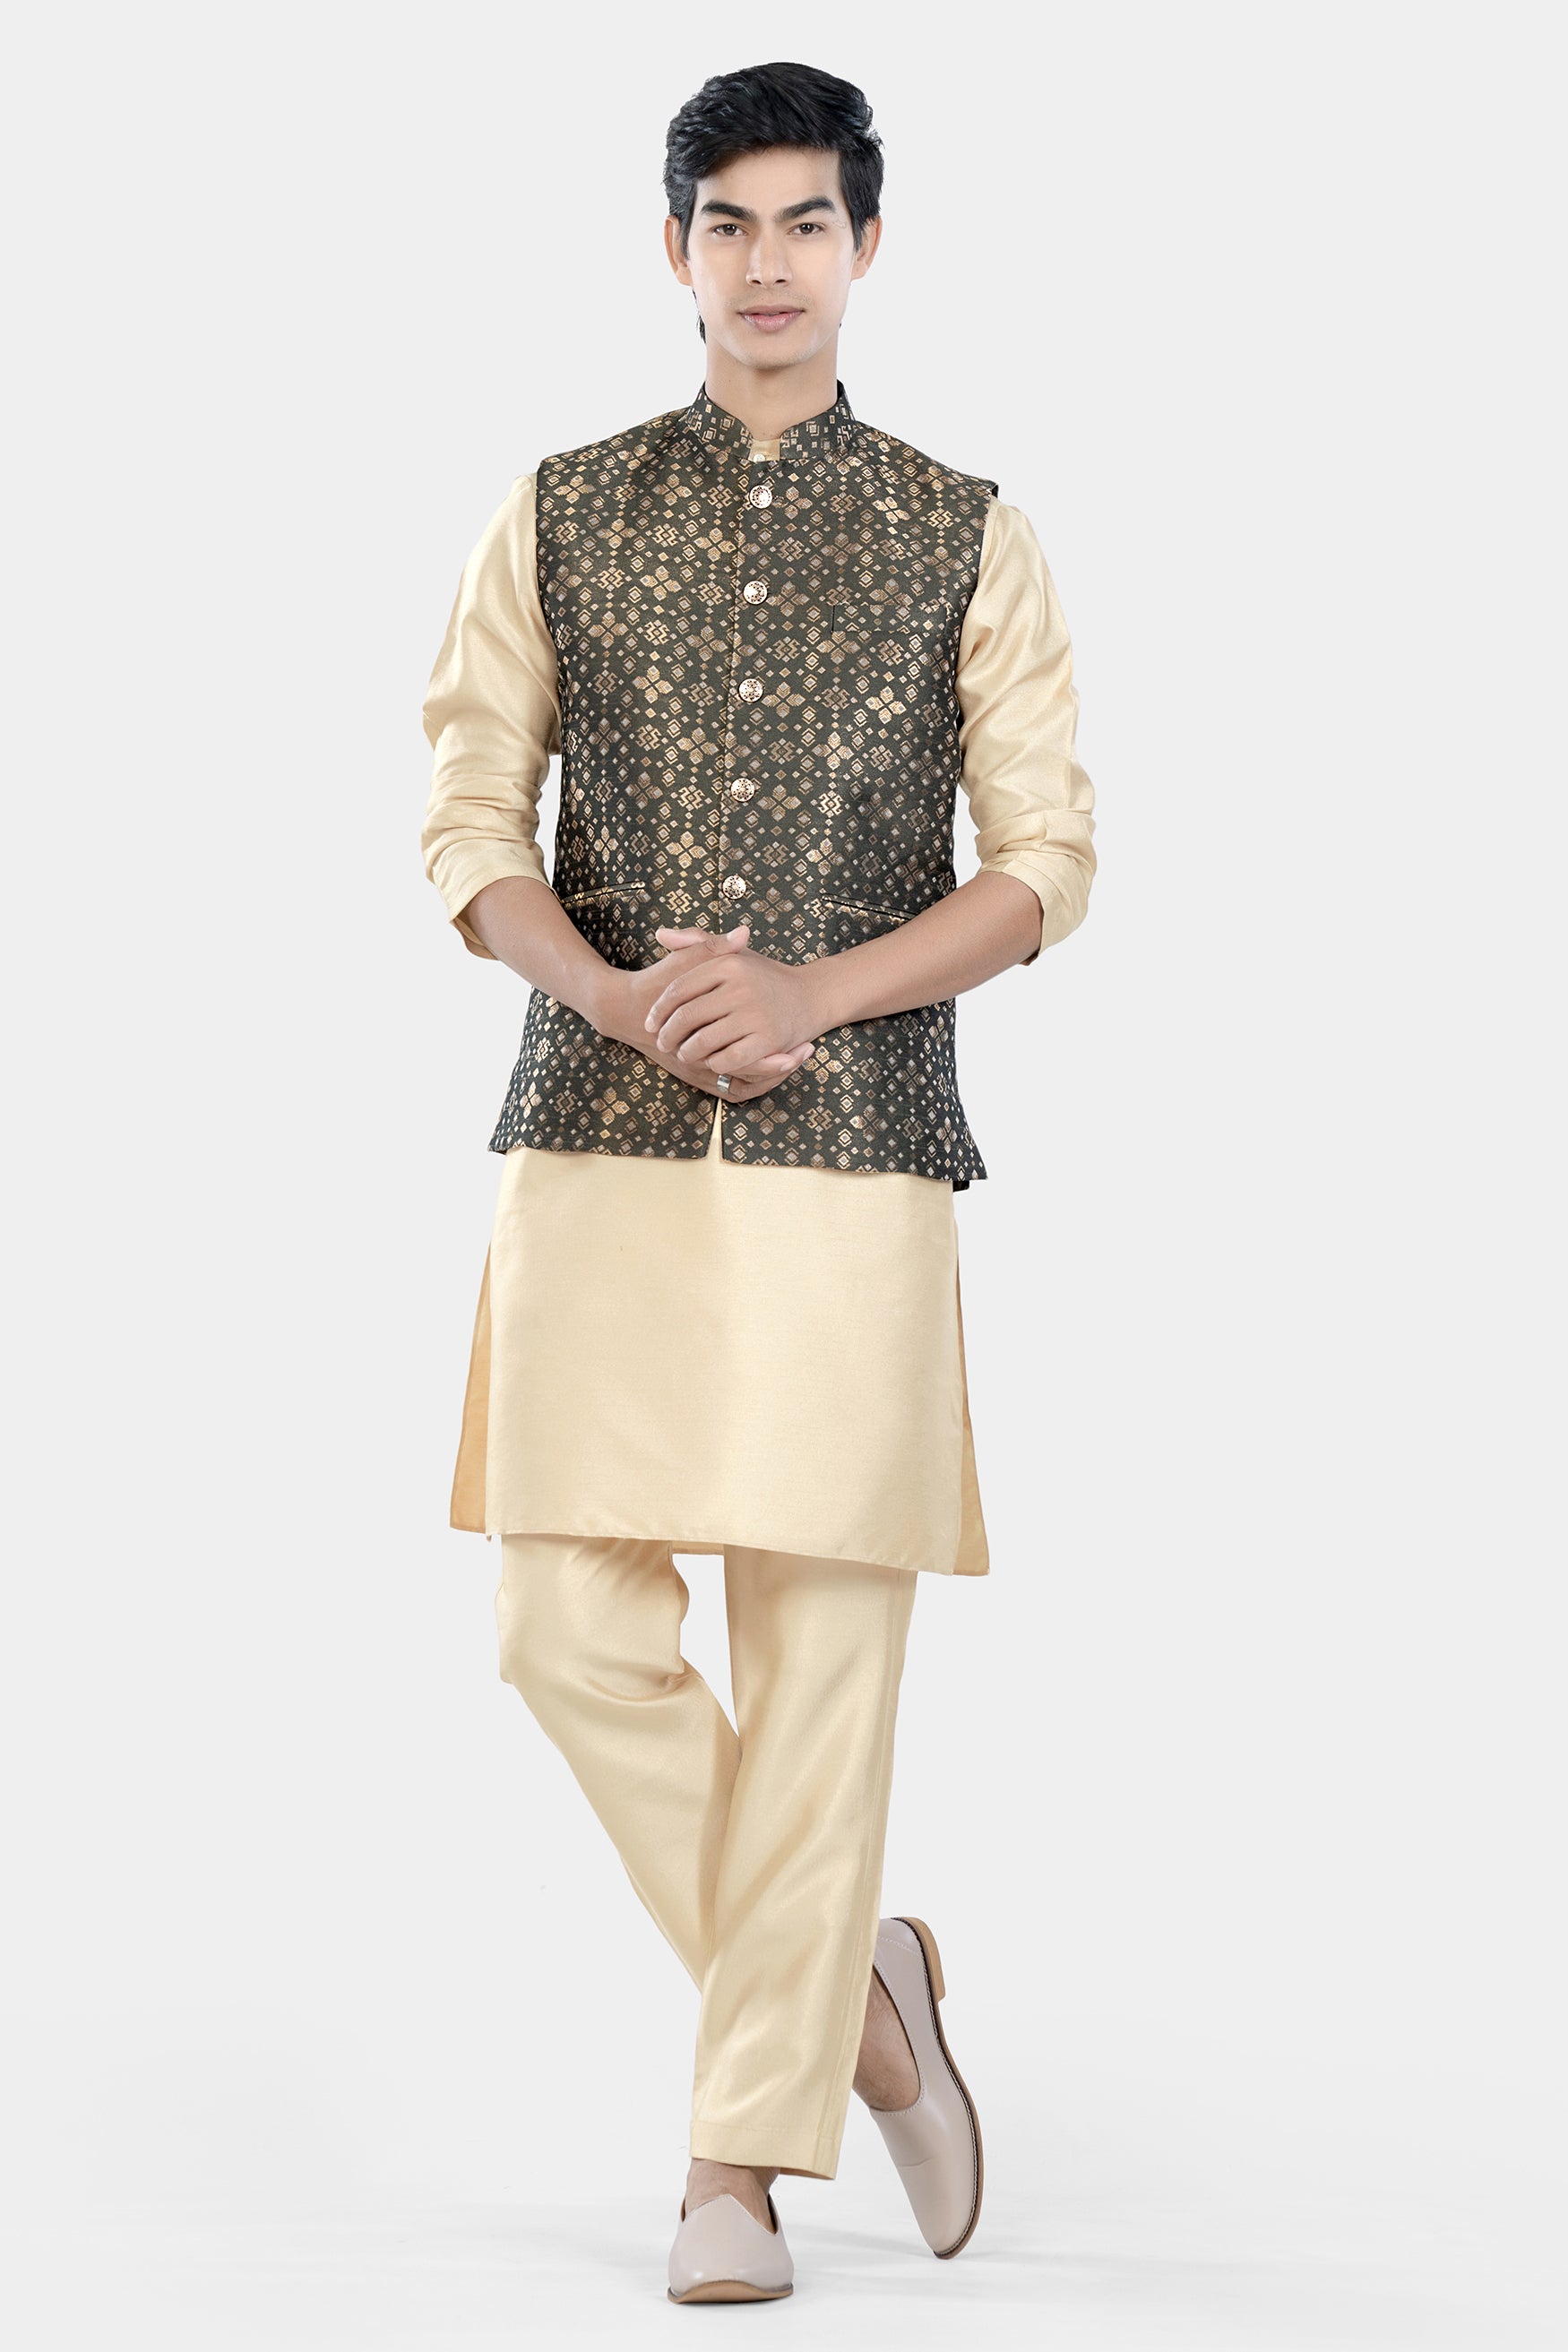 Fuscous Green and Mongoose Brown Floral Jacquard Textured Designer Nehru Jacket